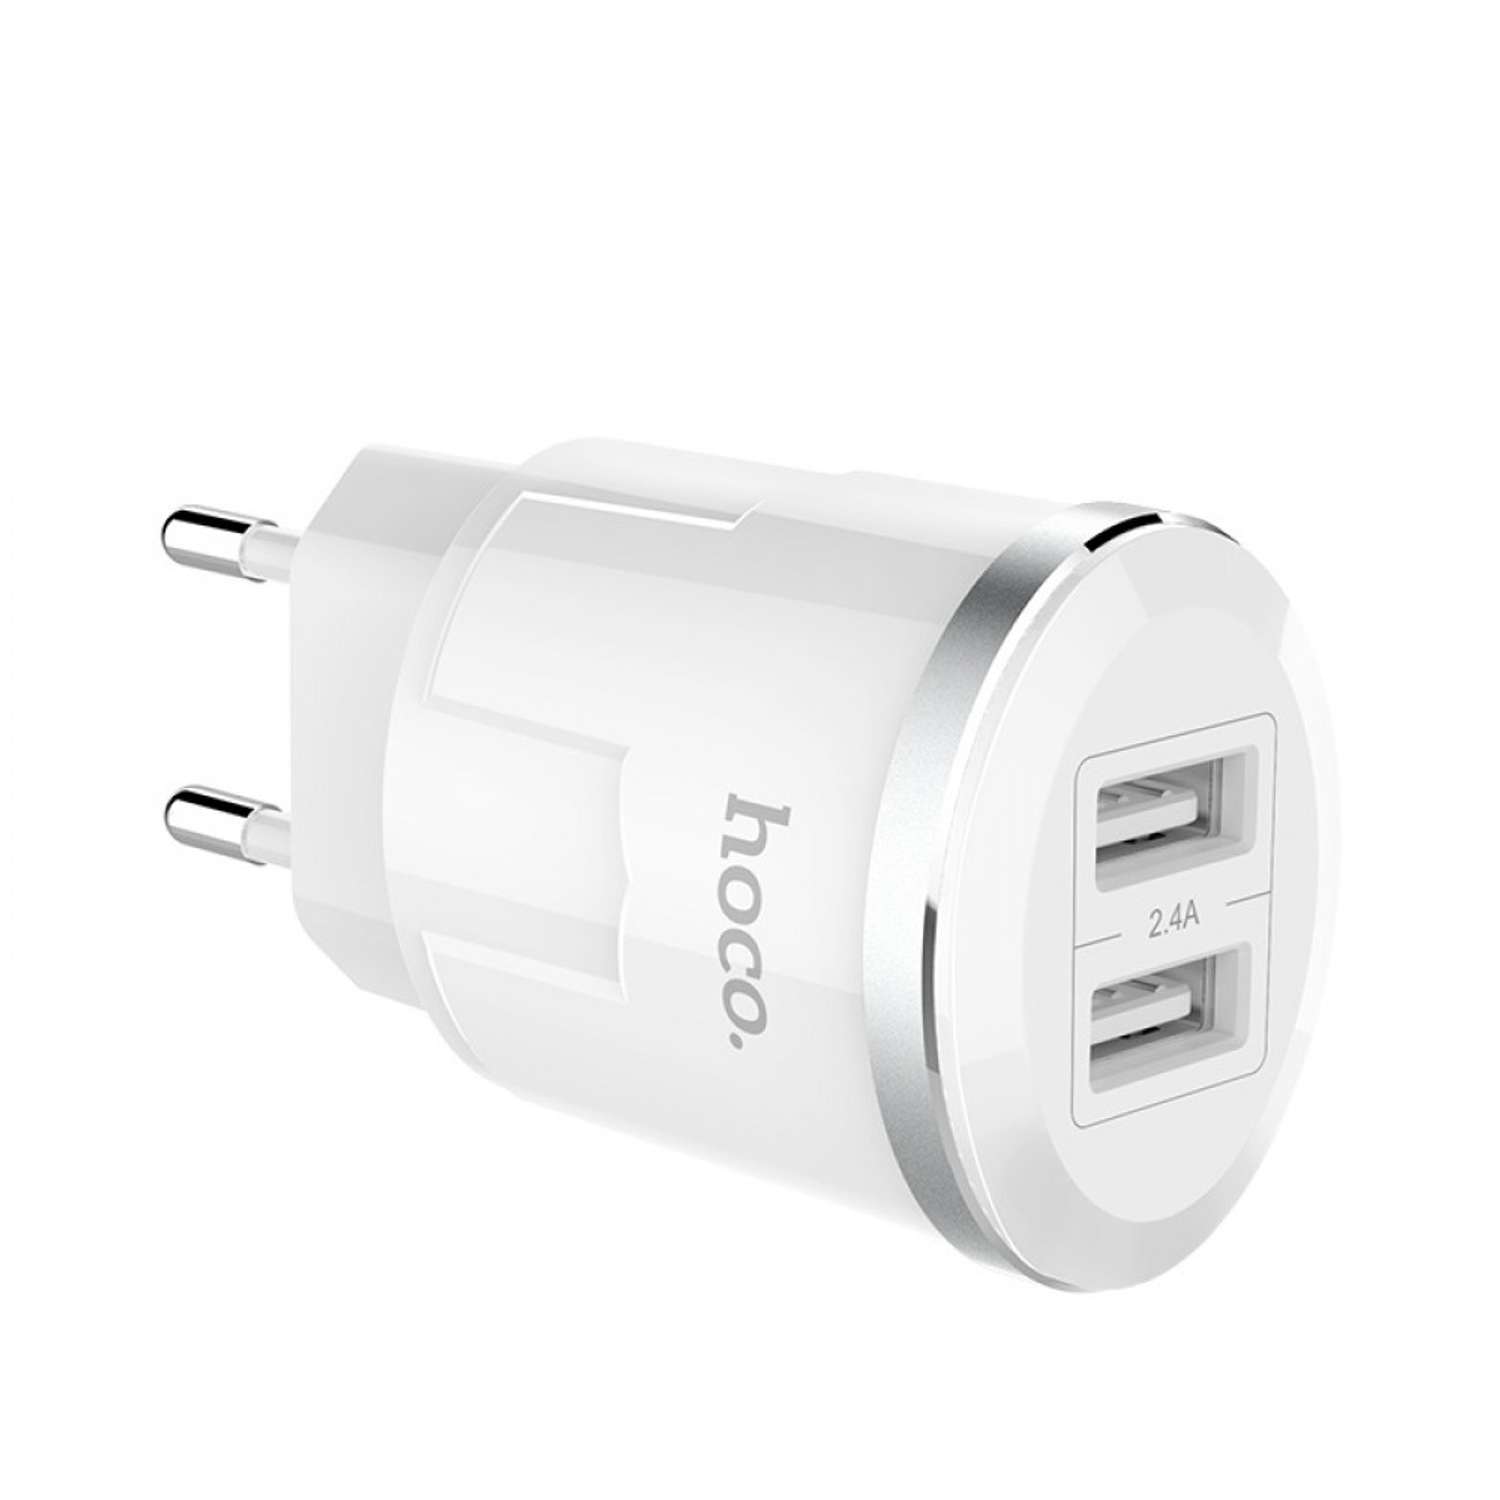 Сетевое зарядное устройство HOCO СЗУ 2-USB /2.4A/ 12W FAST белый - фото 1